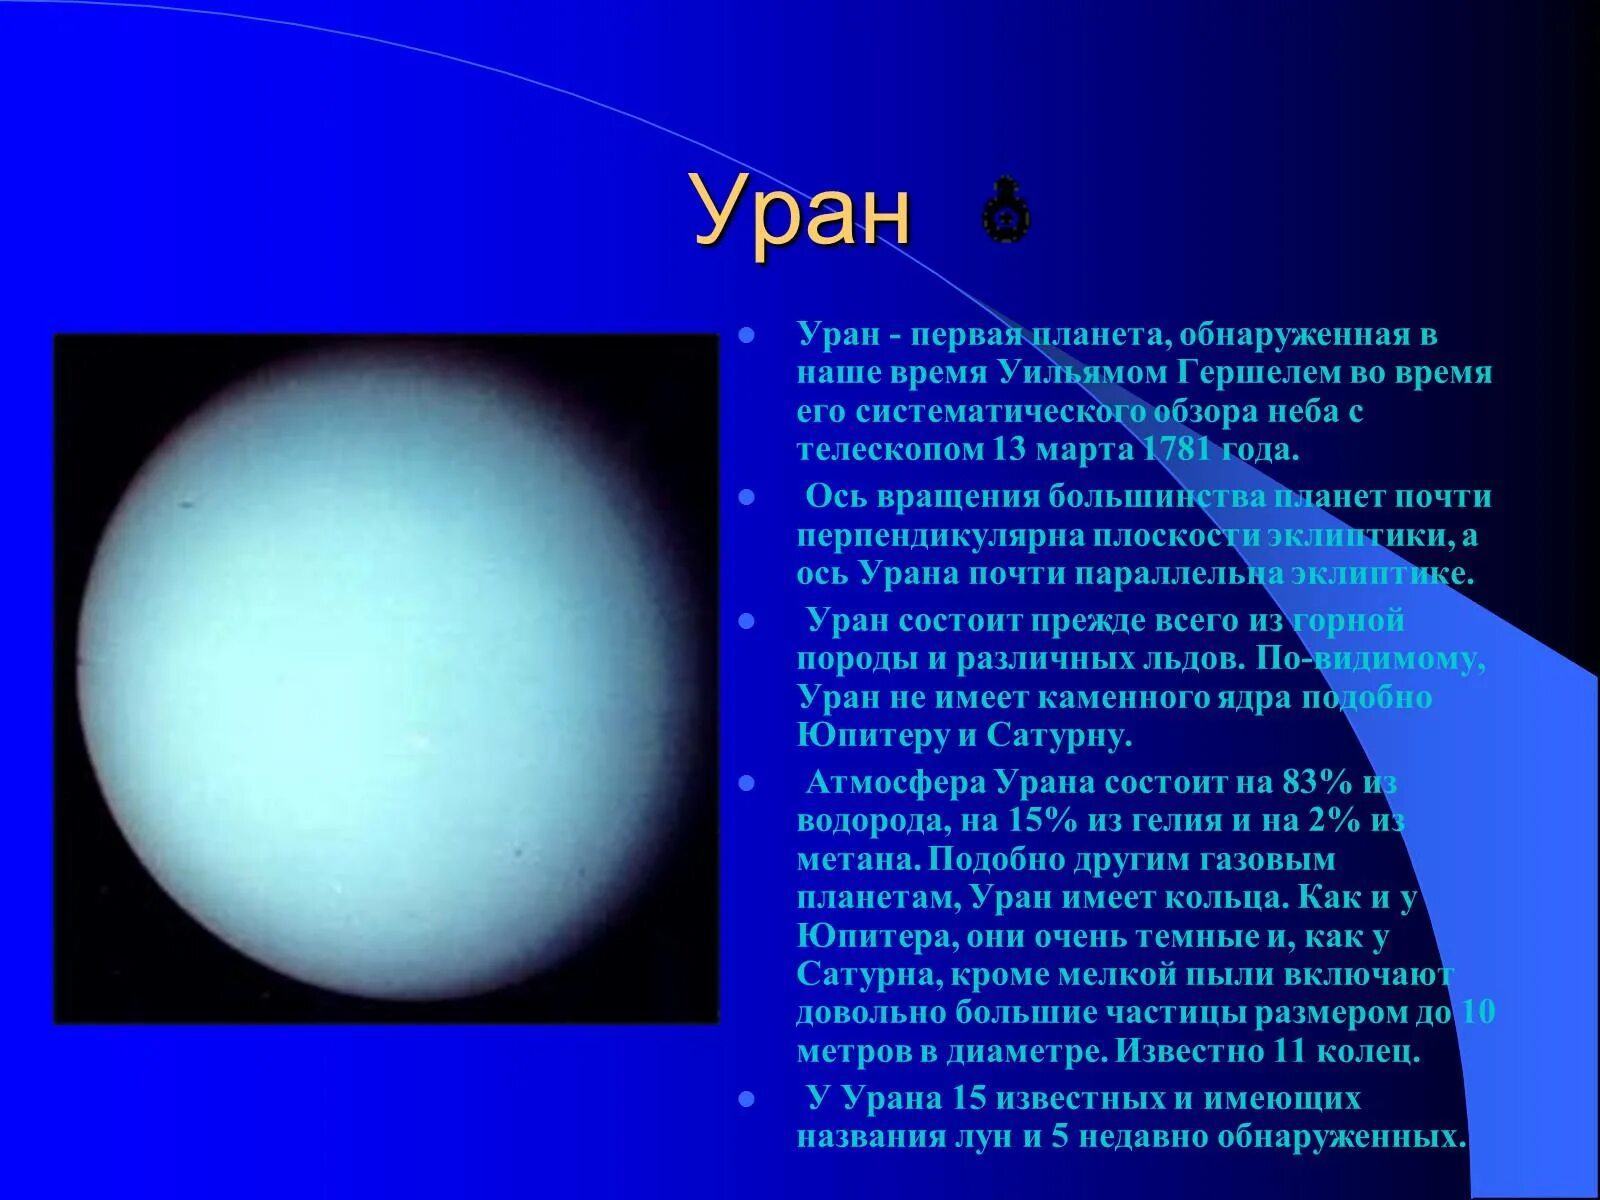 Времена года урана. Уран кратко о планете. Сведения о планете Уран. Планеты гиганты Уран. Планета Уран описание.